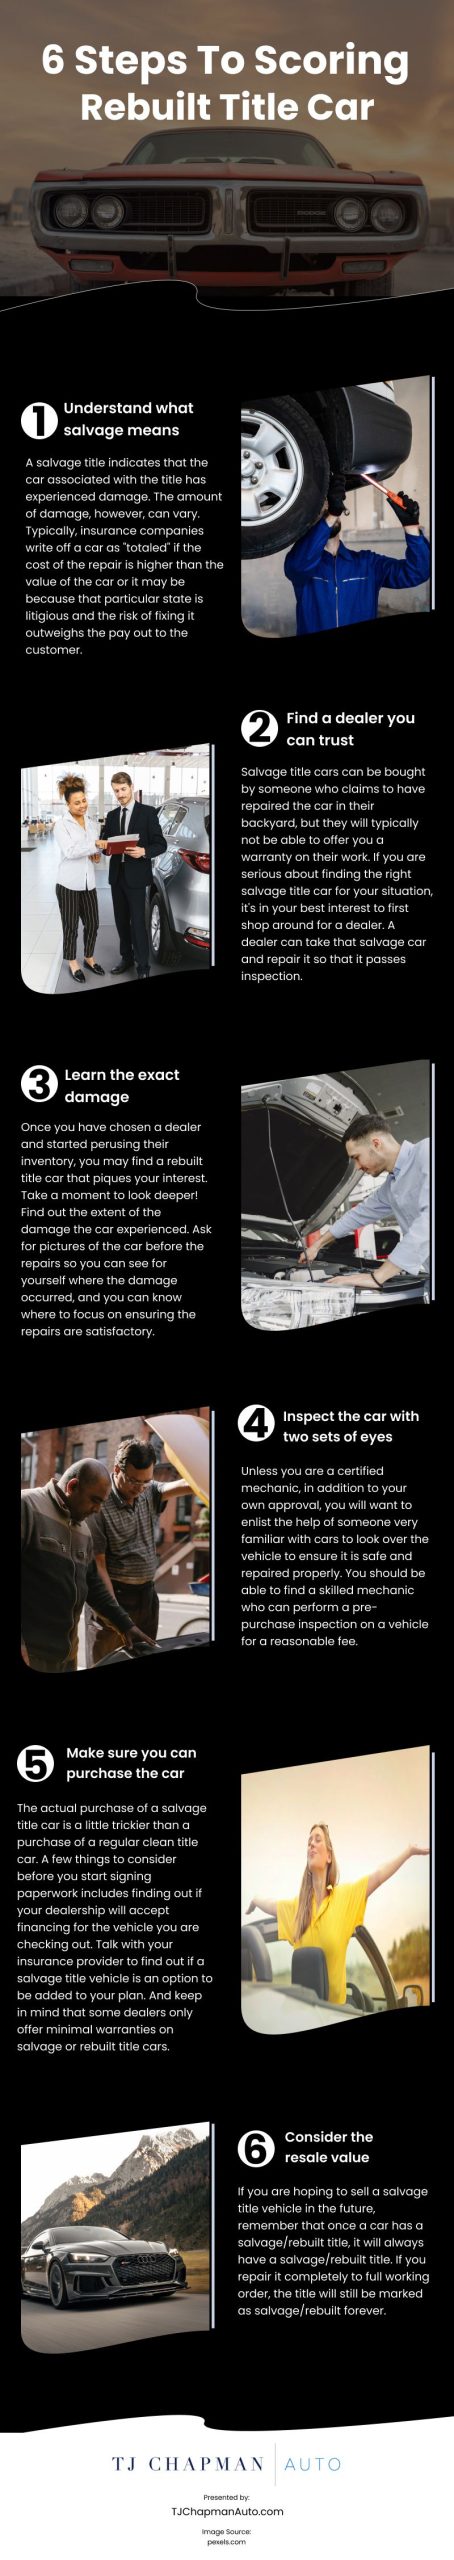 6 Steps to Scoring Rebuilt Title Car Infographic